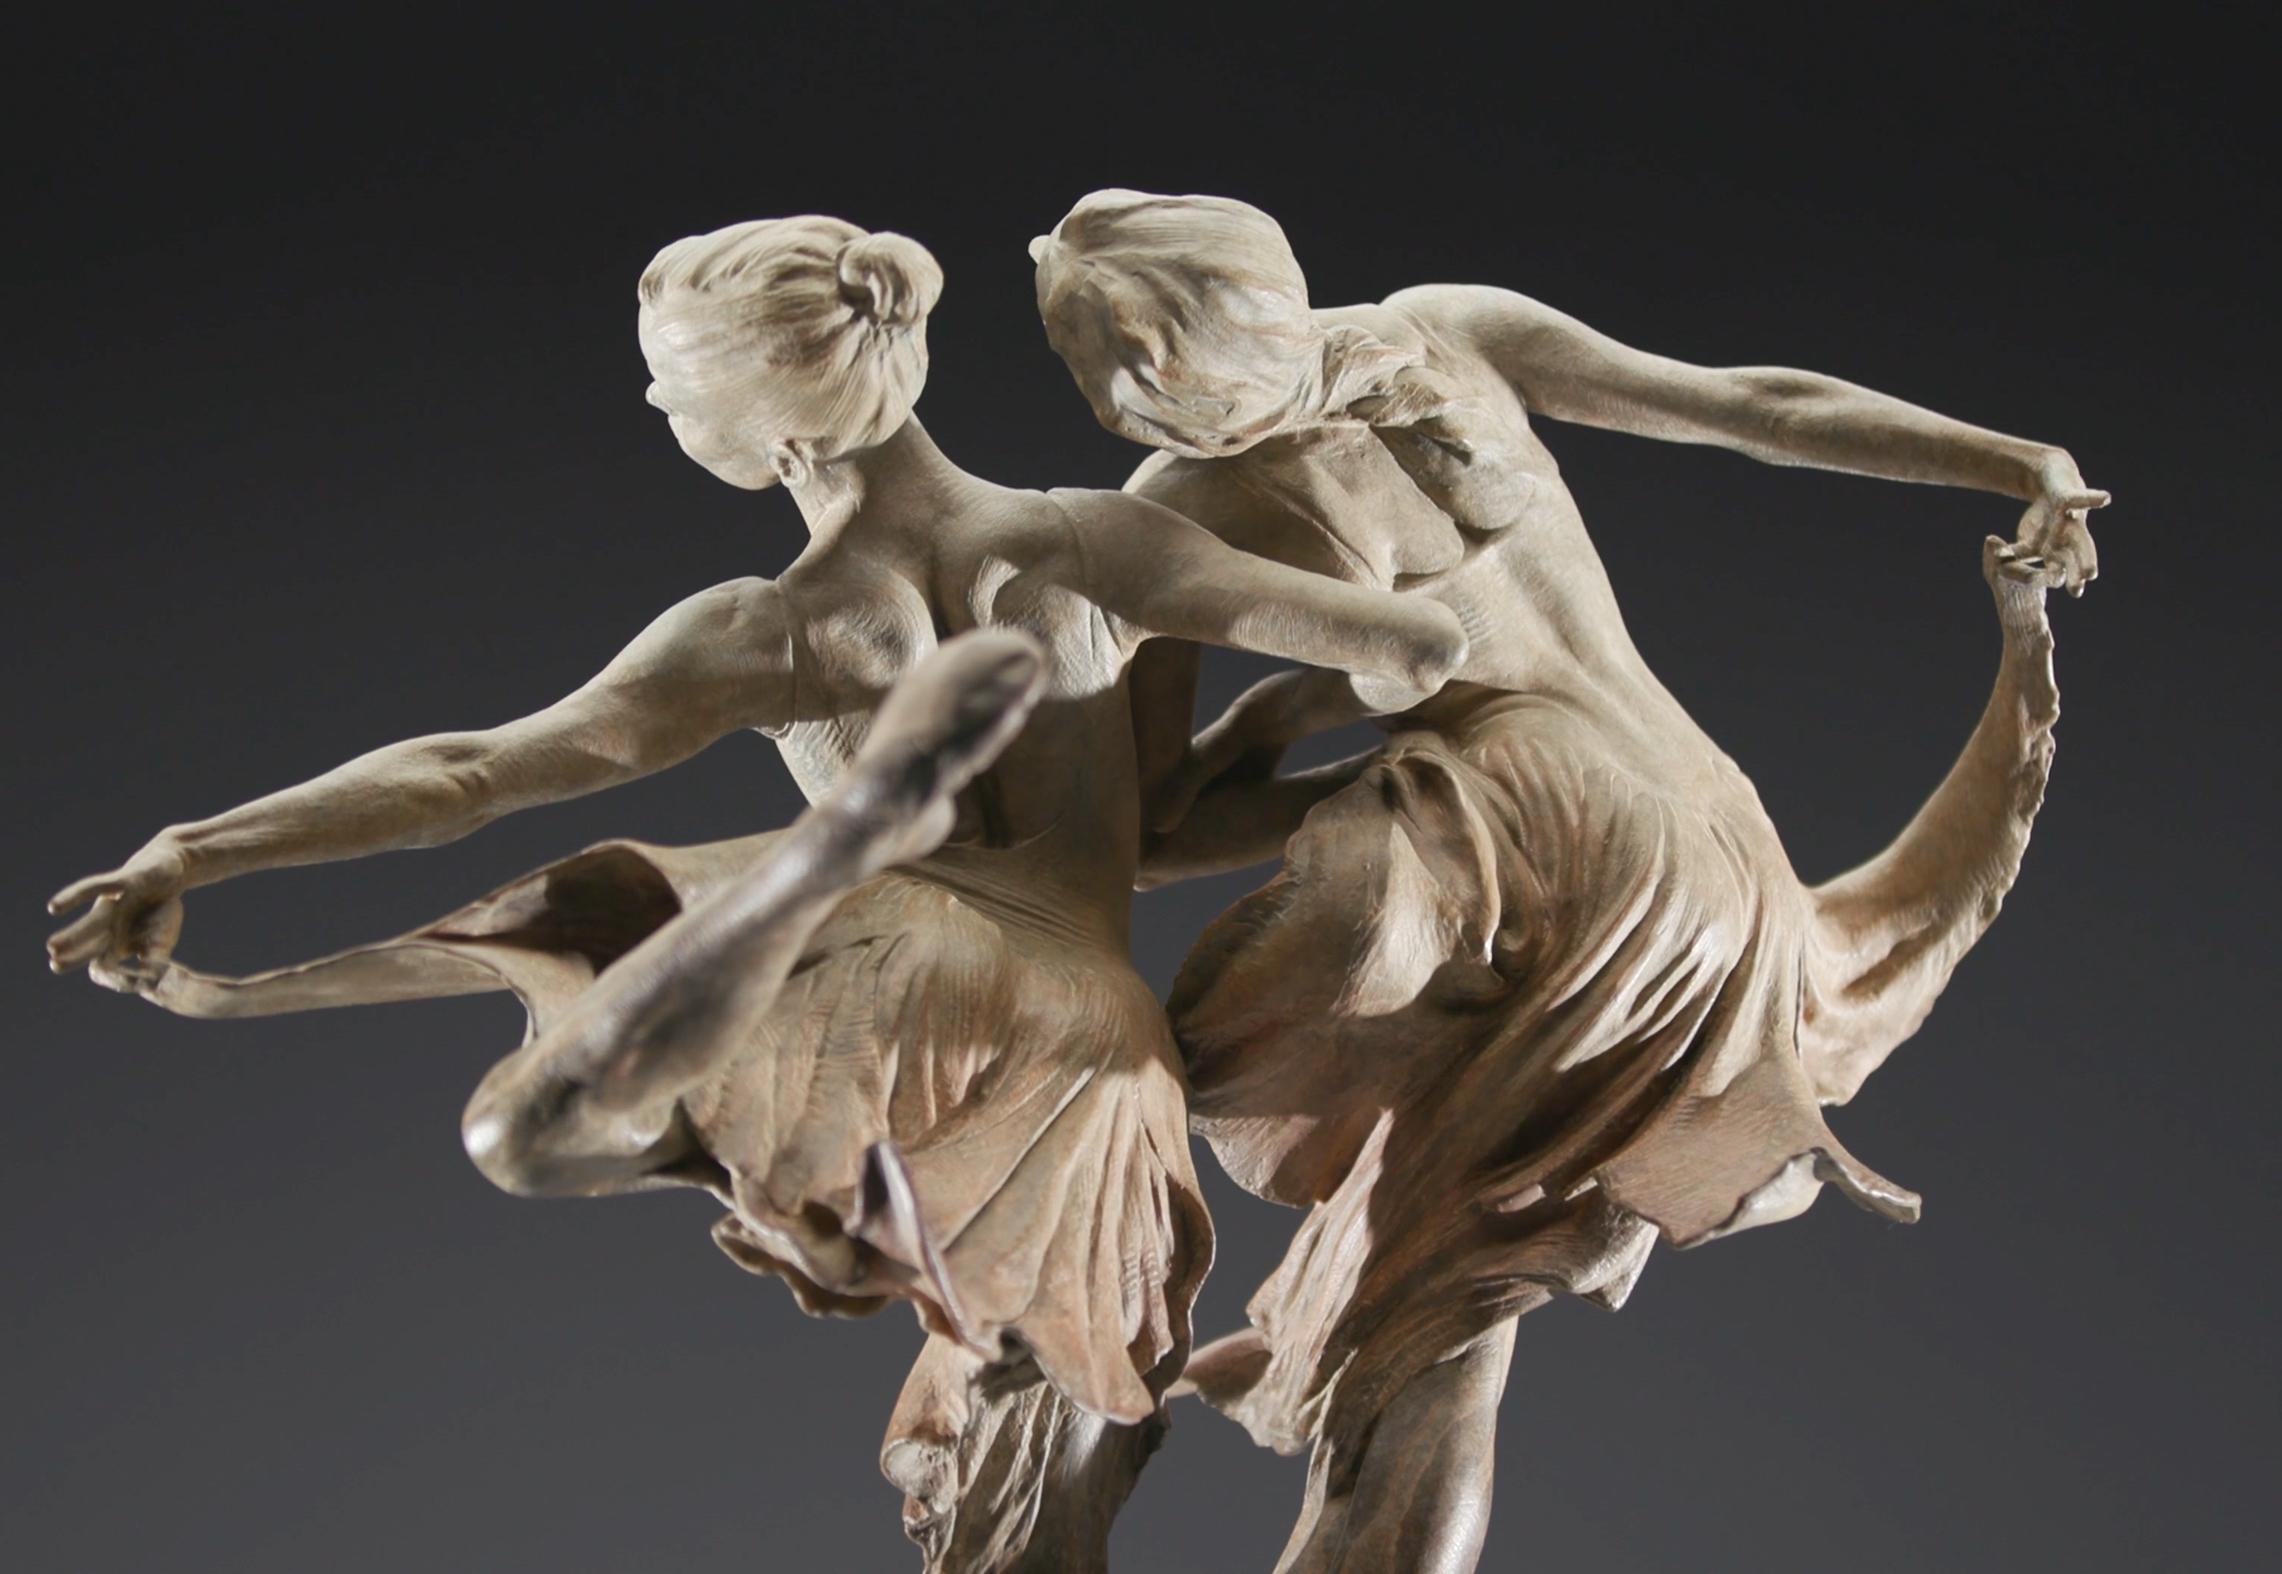 Sisters, Atelier - Sculpture by Richard MacDonald